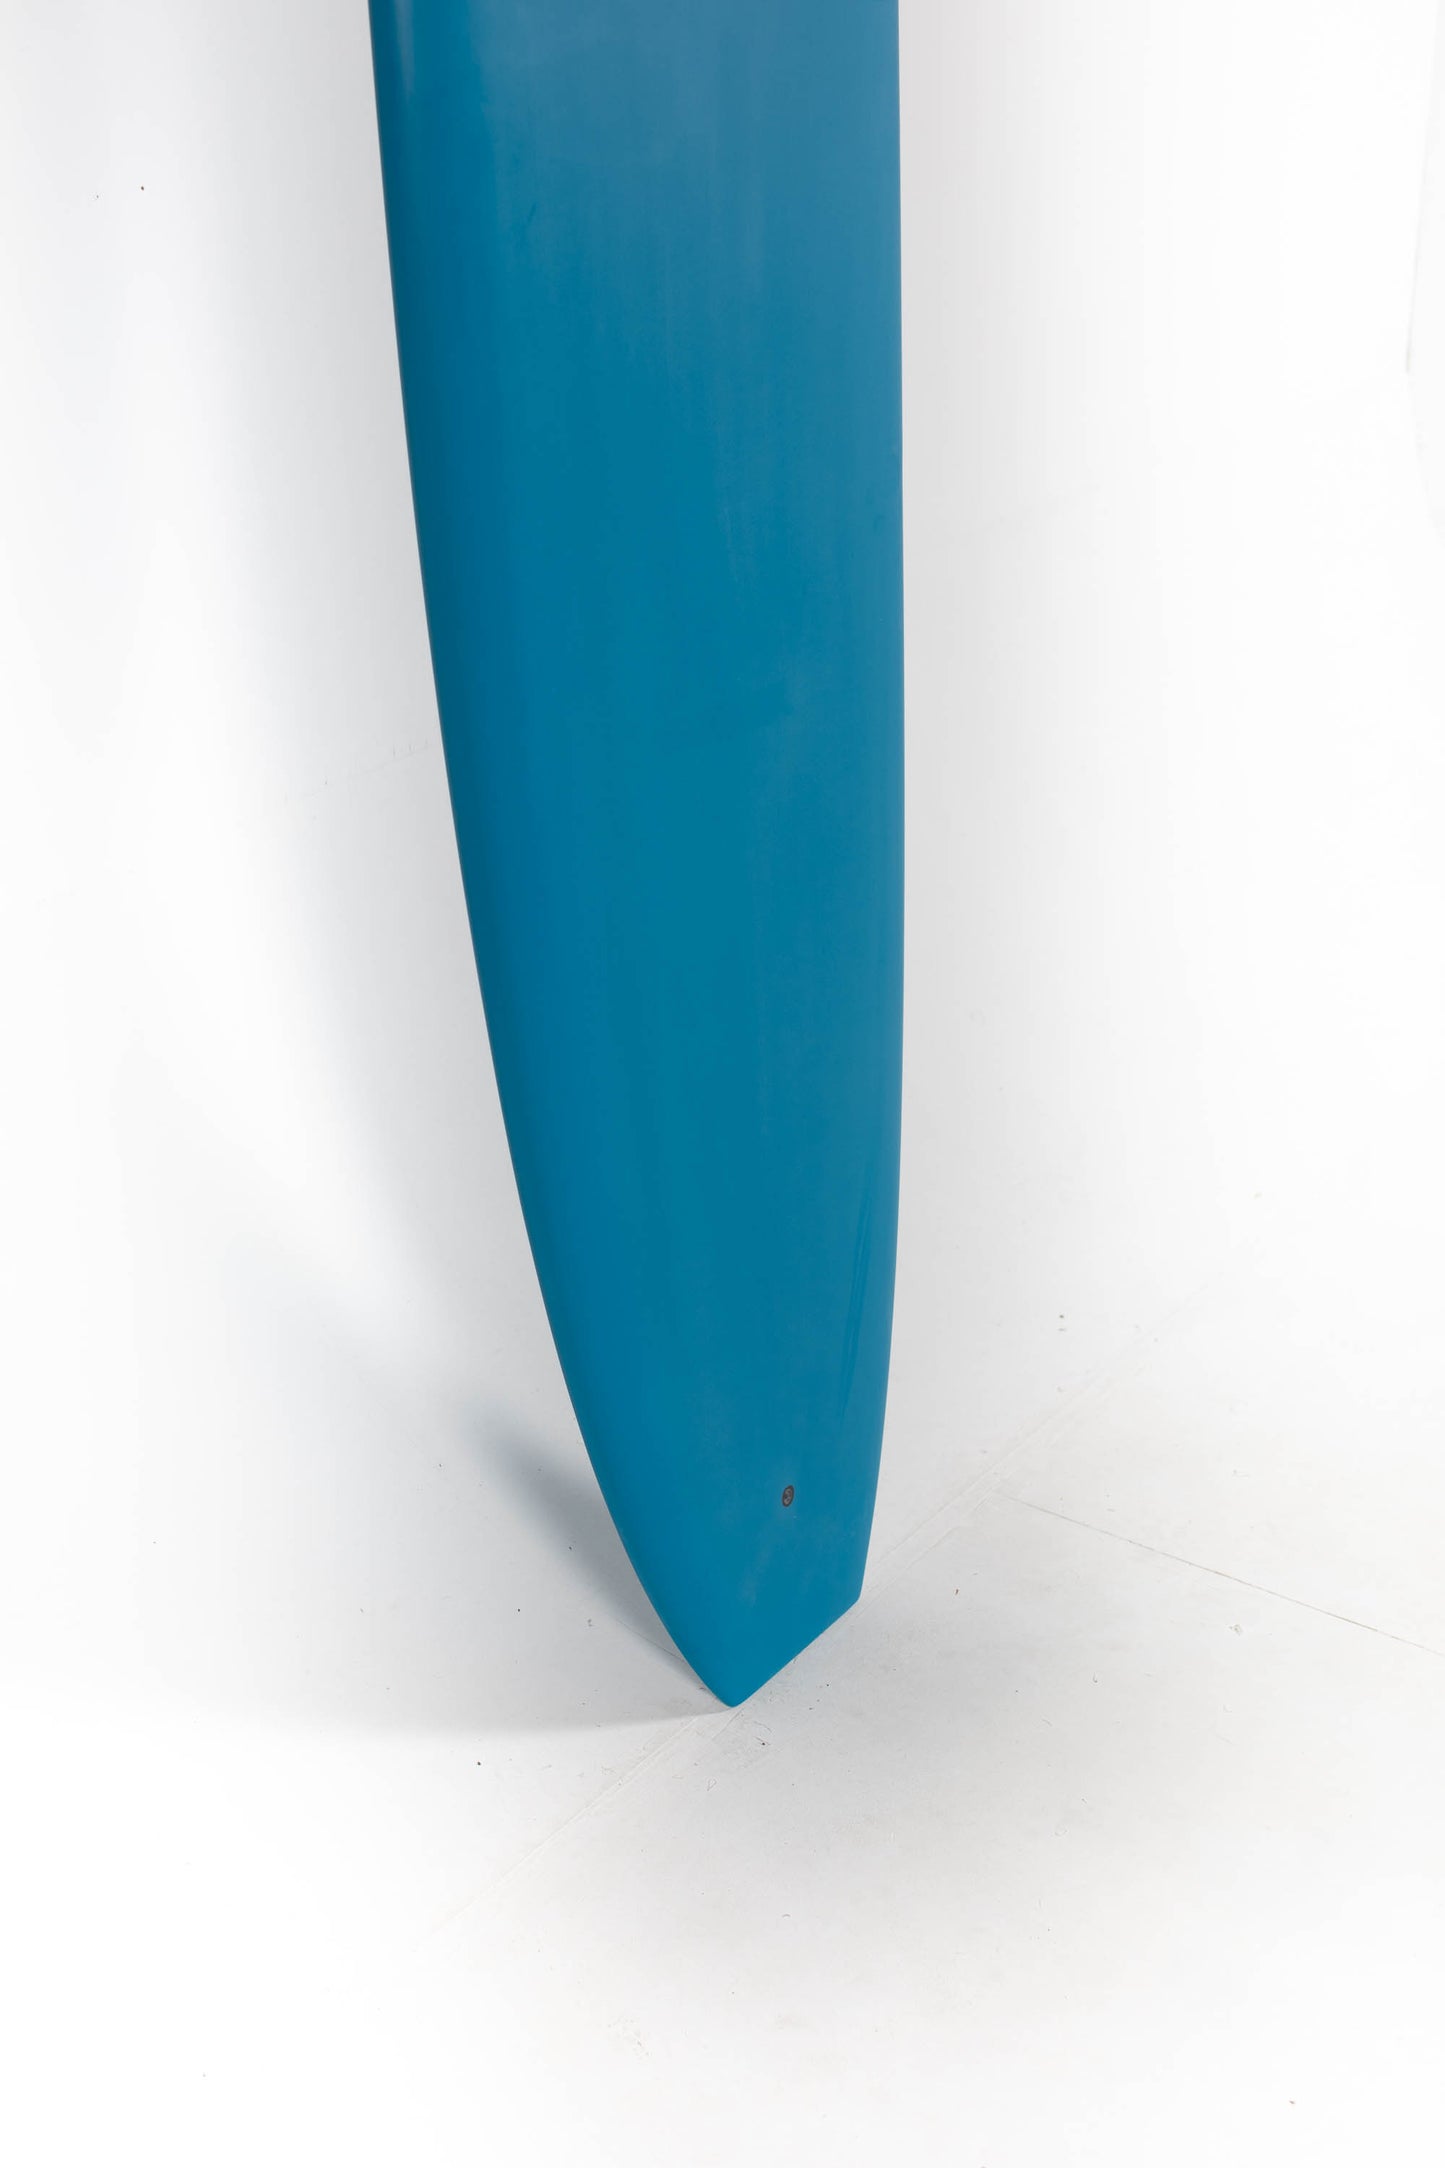 
                  
                    Pukas Surf Shop Dead Sled Christenson surfboards
                  
                